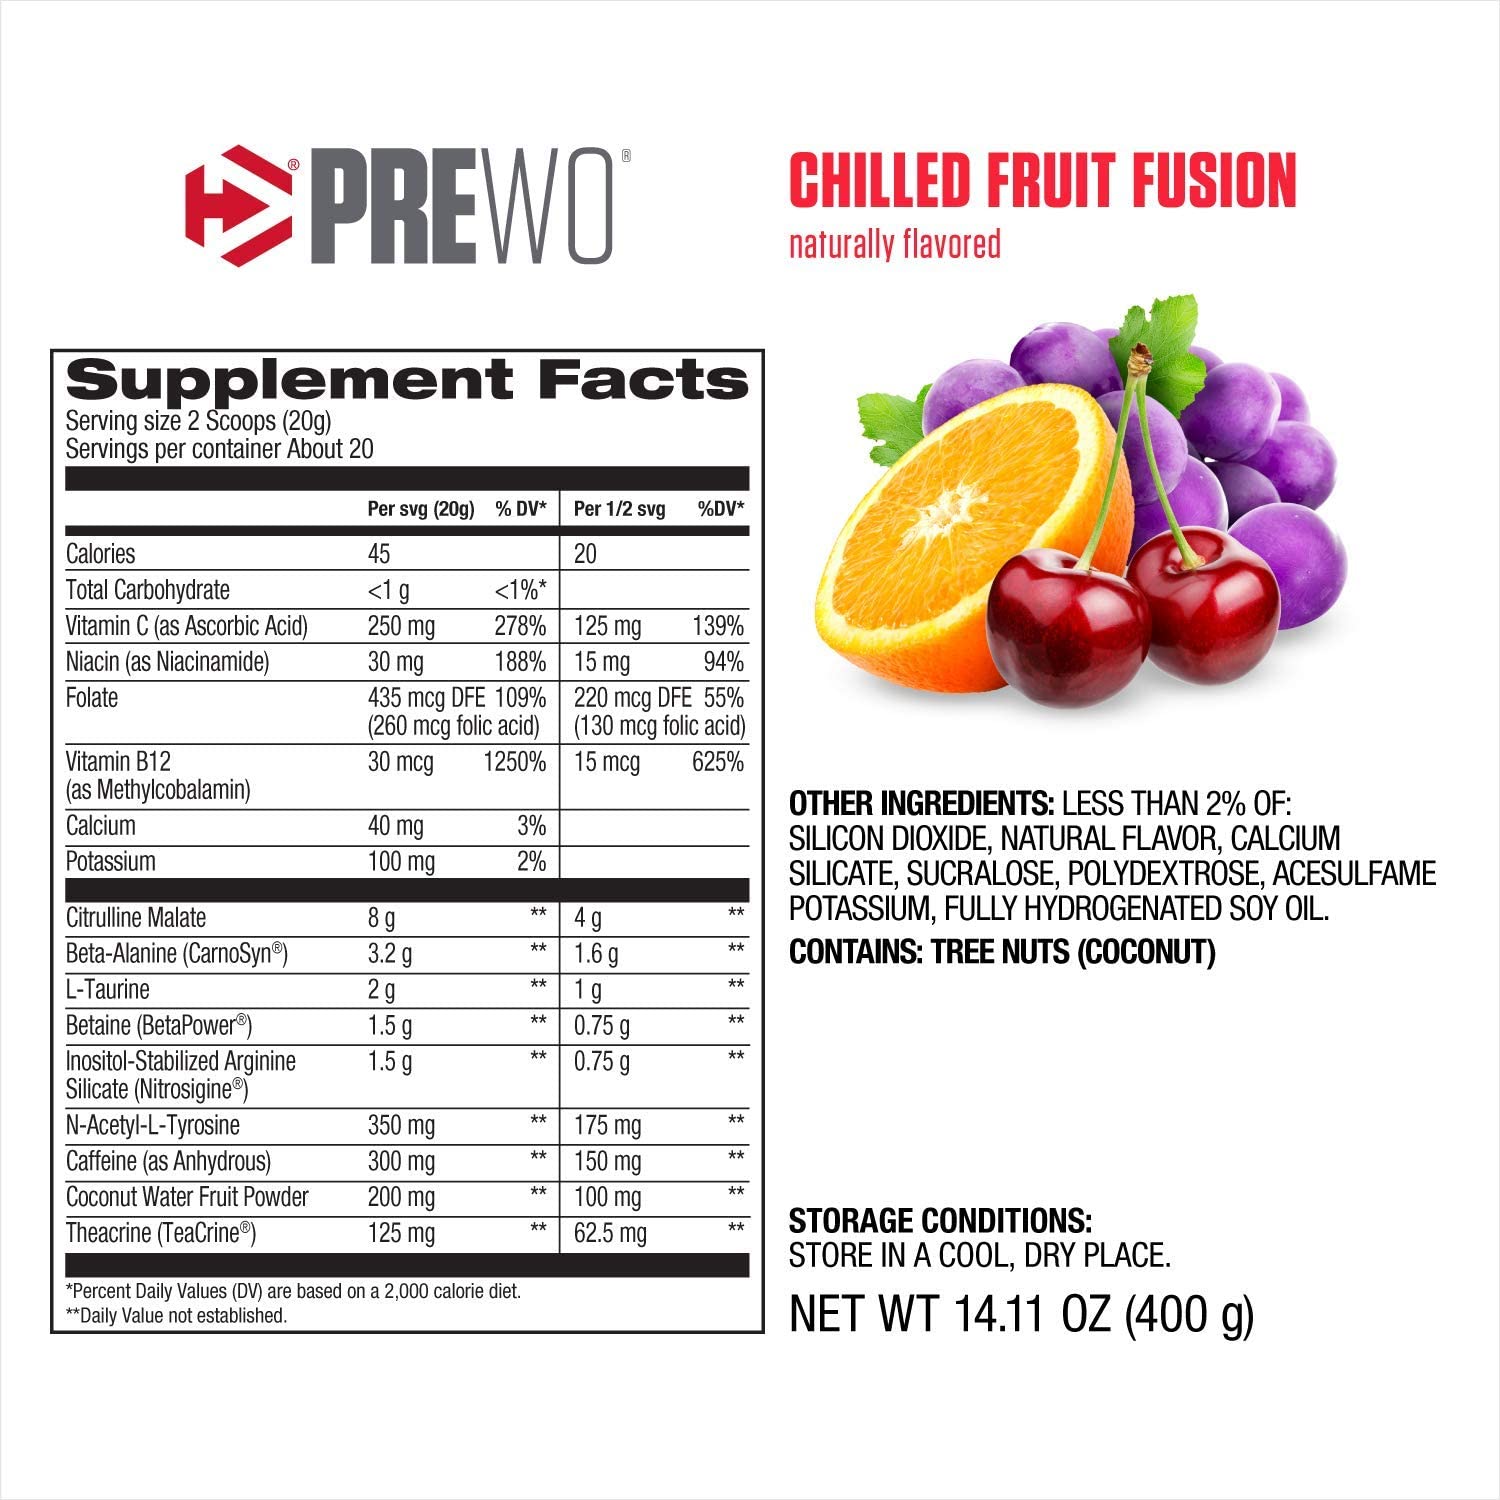 Dymatize Nutrition Pre-Workout 400g / Chilled Fruit Fusion